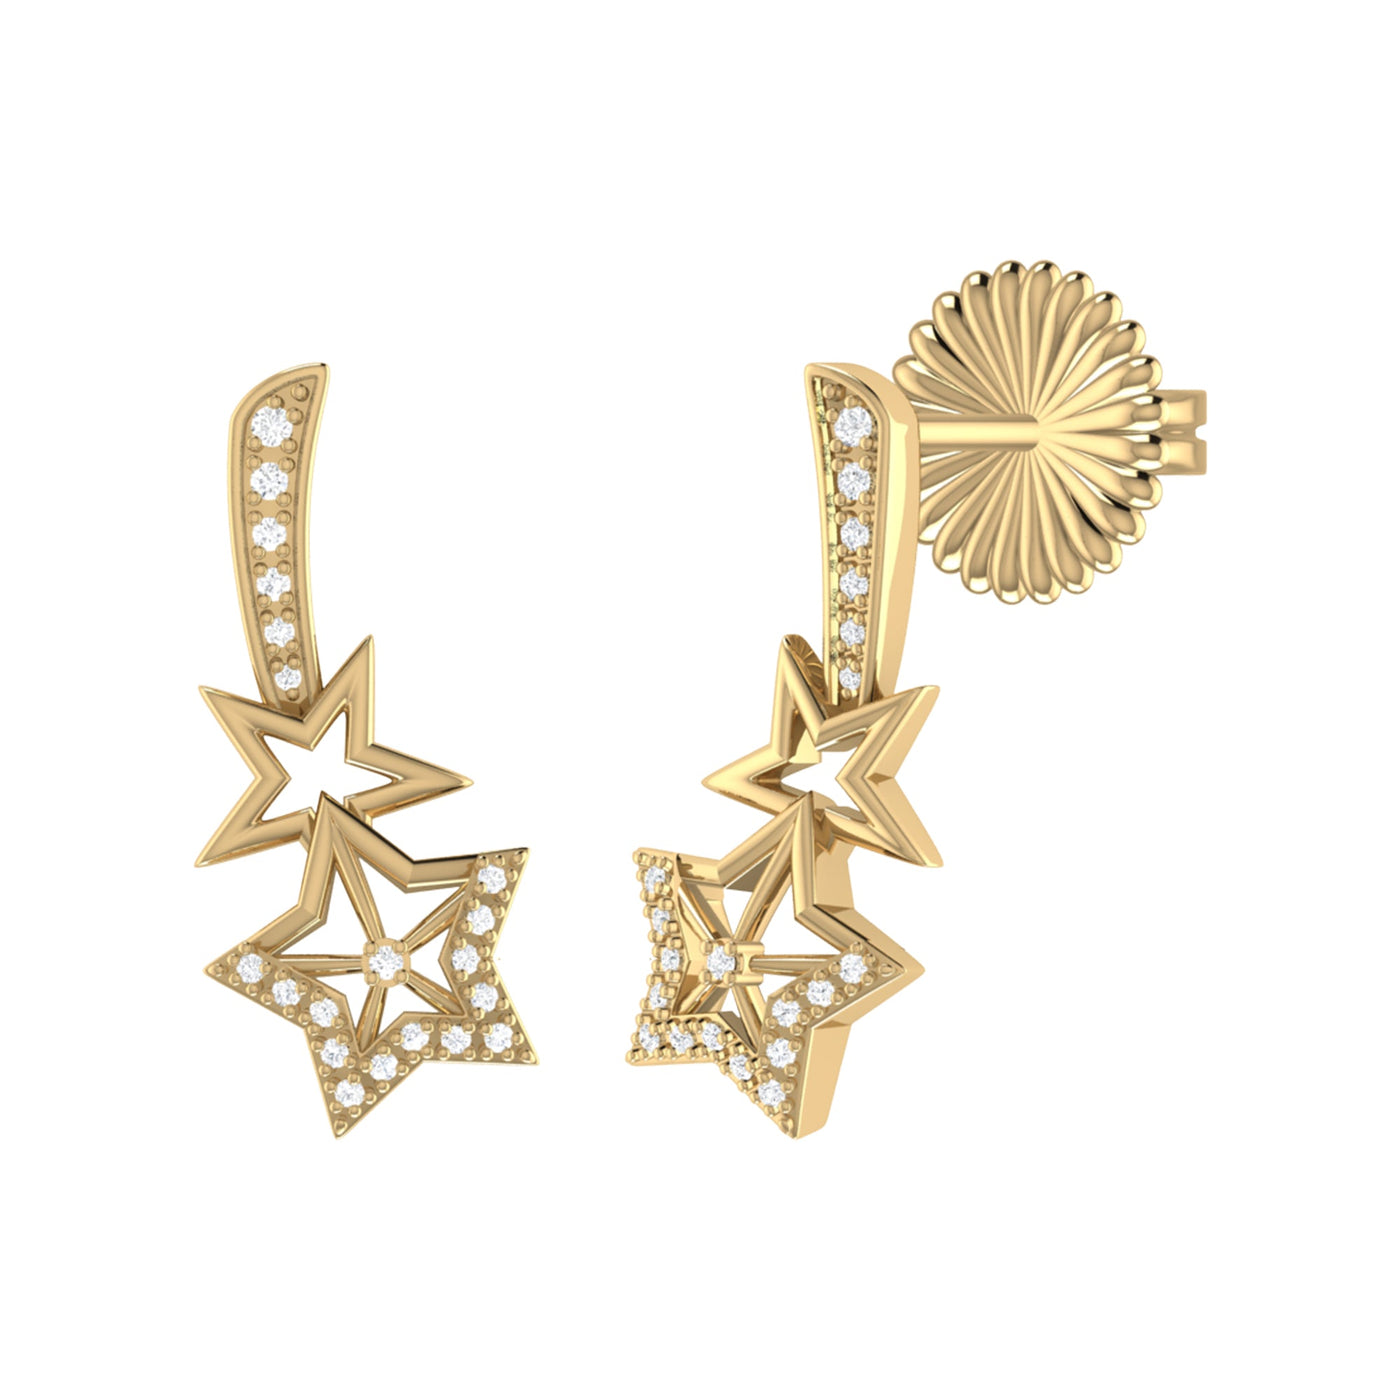 Stud earrings - shooting stars - 14 carat gold plated - diamonds